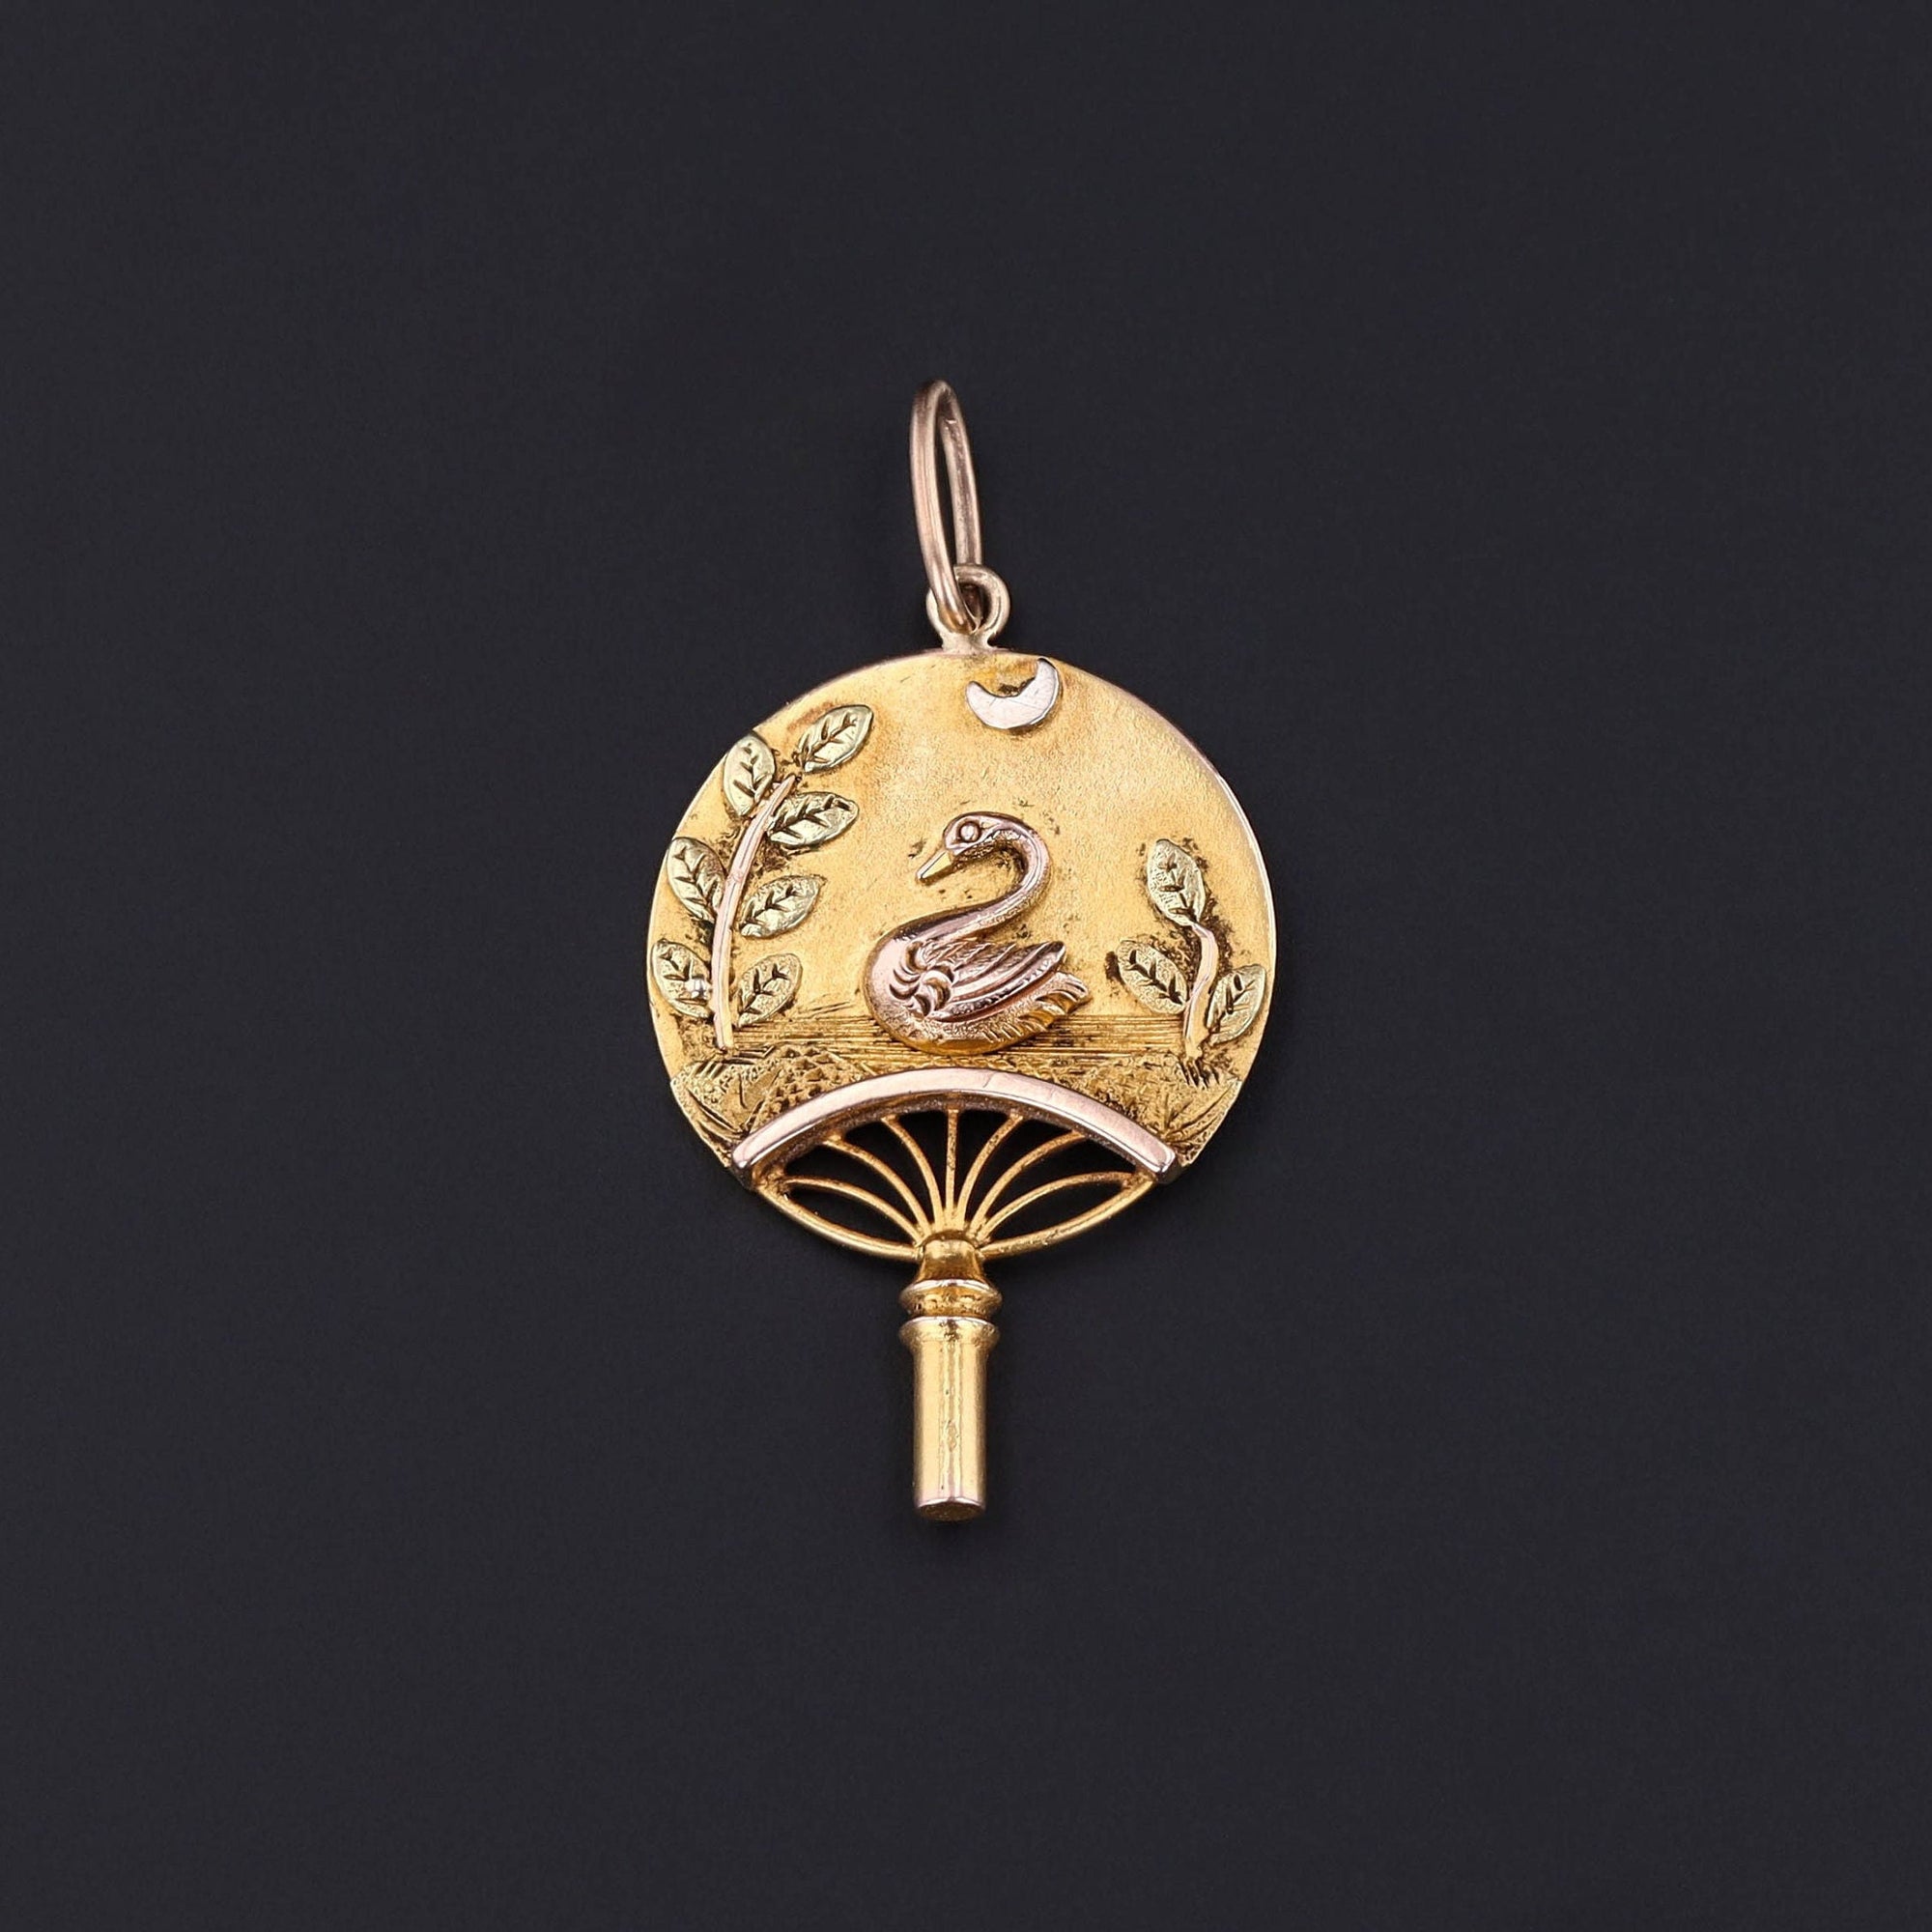 Japonaiserie Jewelry | Antique Swan Charm 